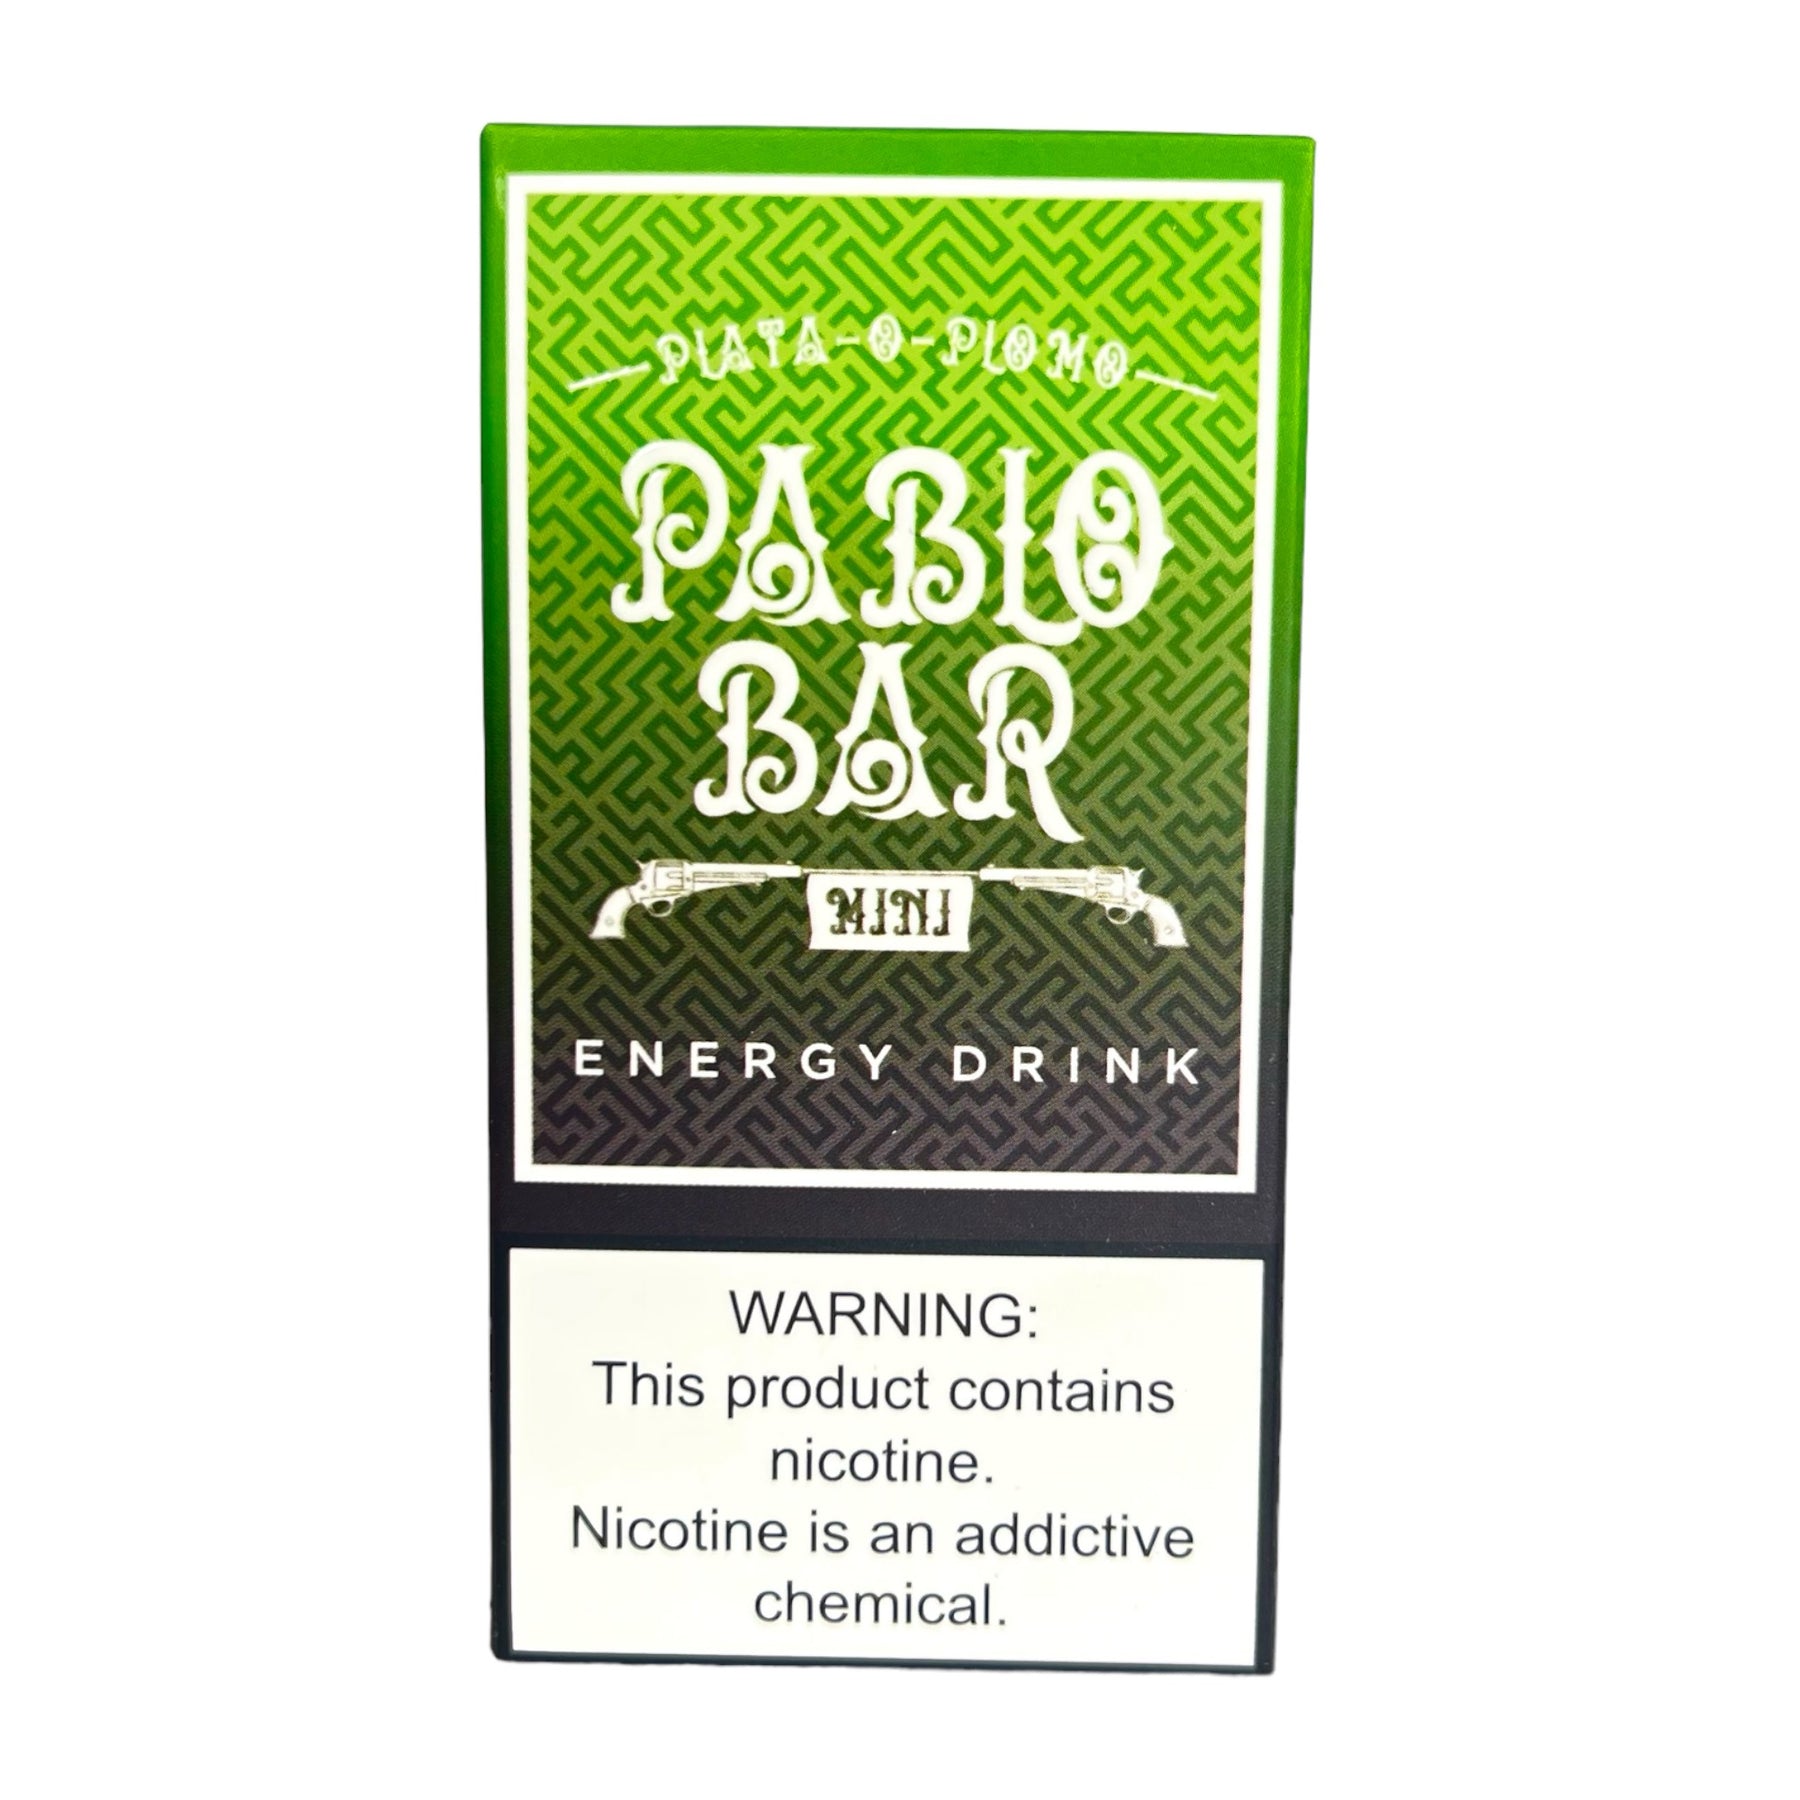 energy drink pablo bar 